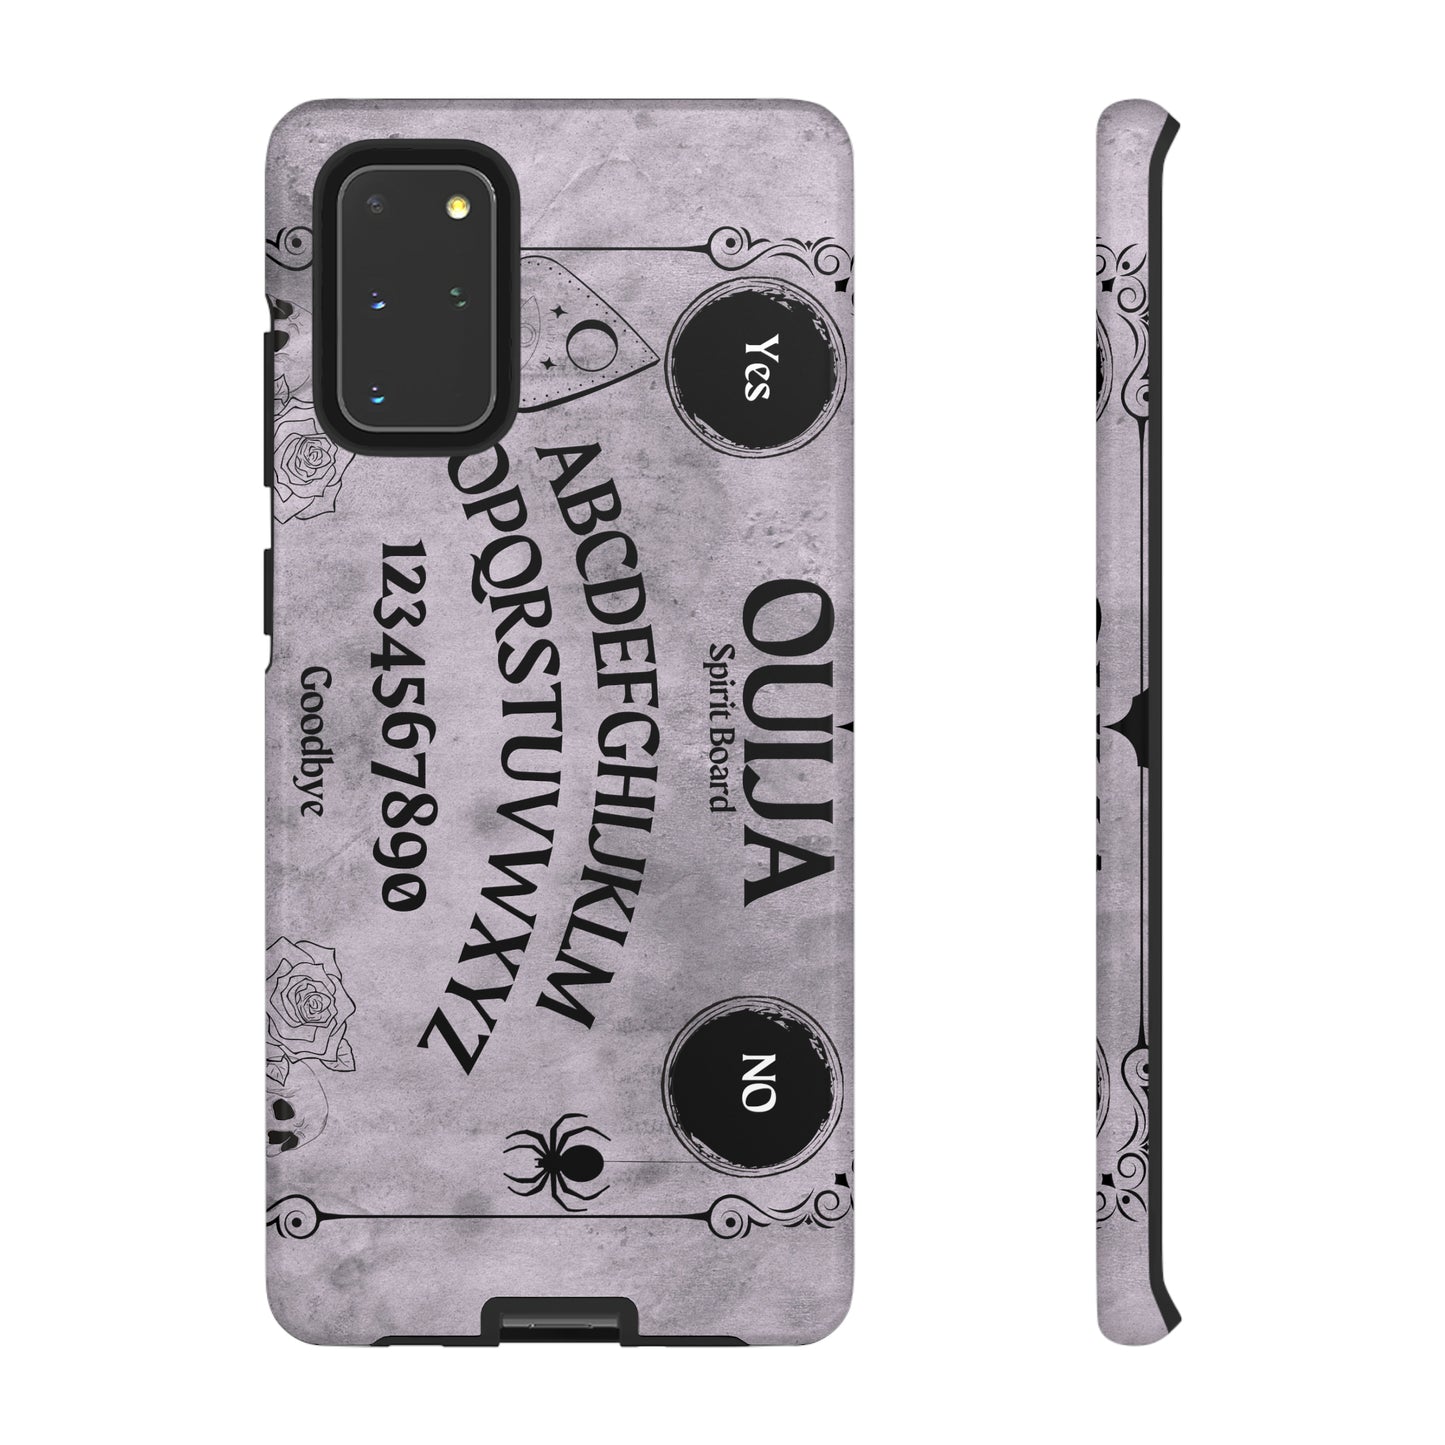 Ouija Board Tough Phone Cases For Samsung iPhone GooglePhone CaseVTZdesignsSamsung Galaxy S20+GlossyAccessoriesGlossyhalloween